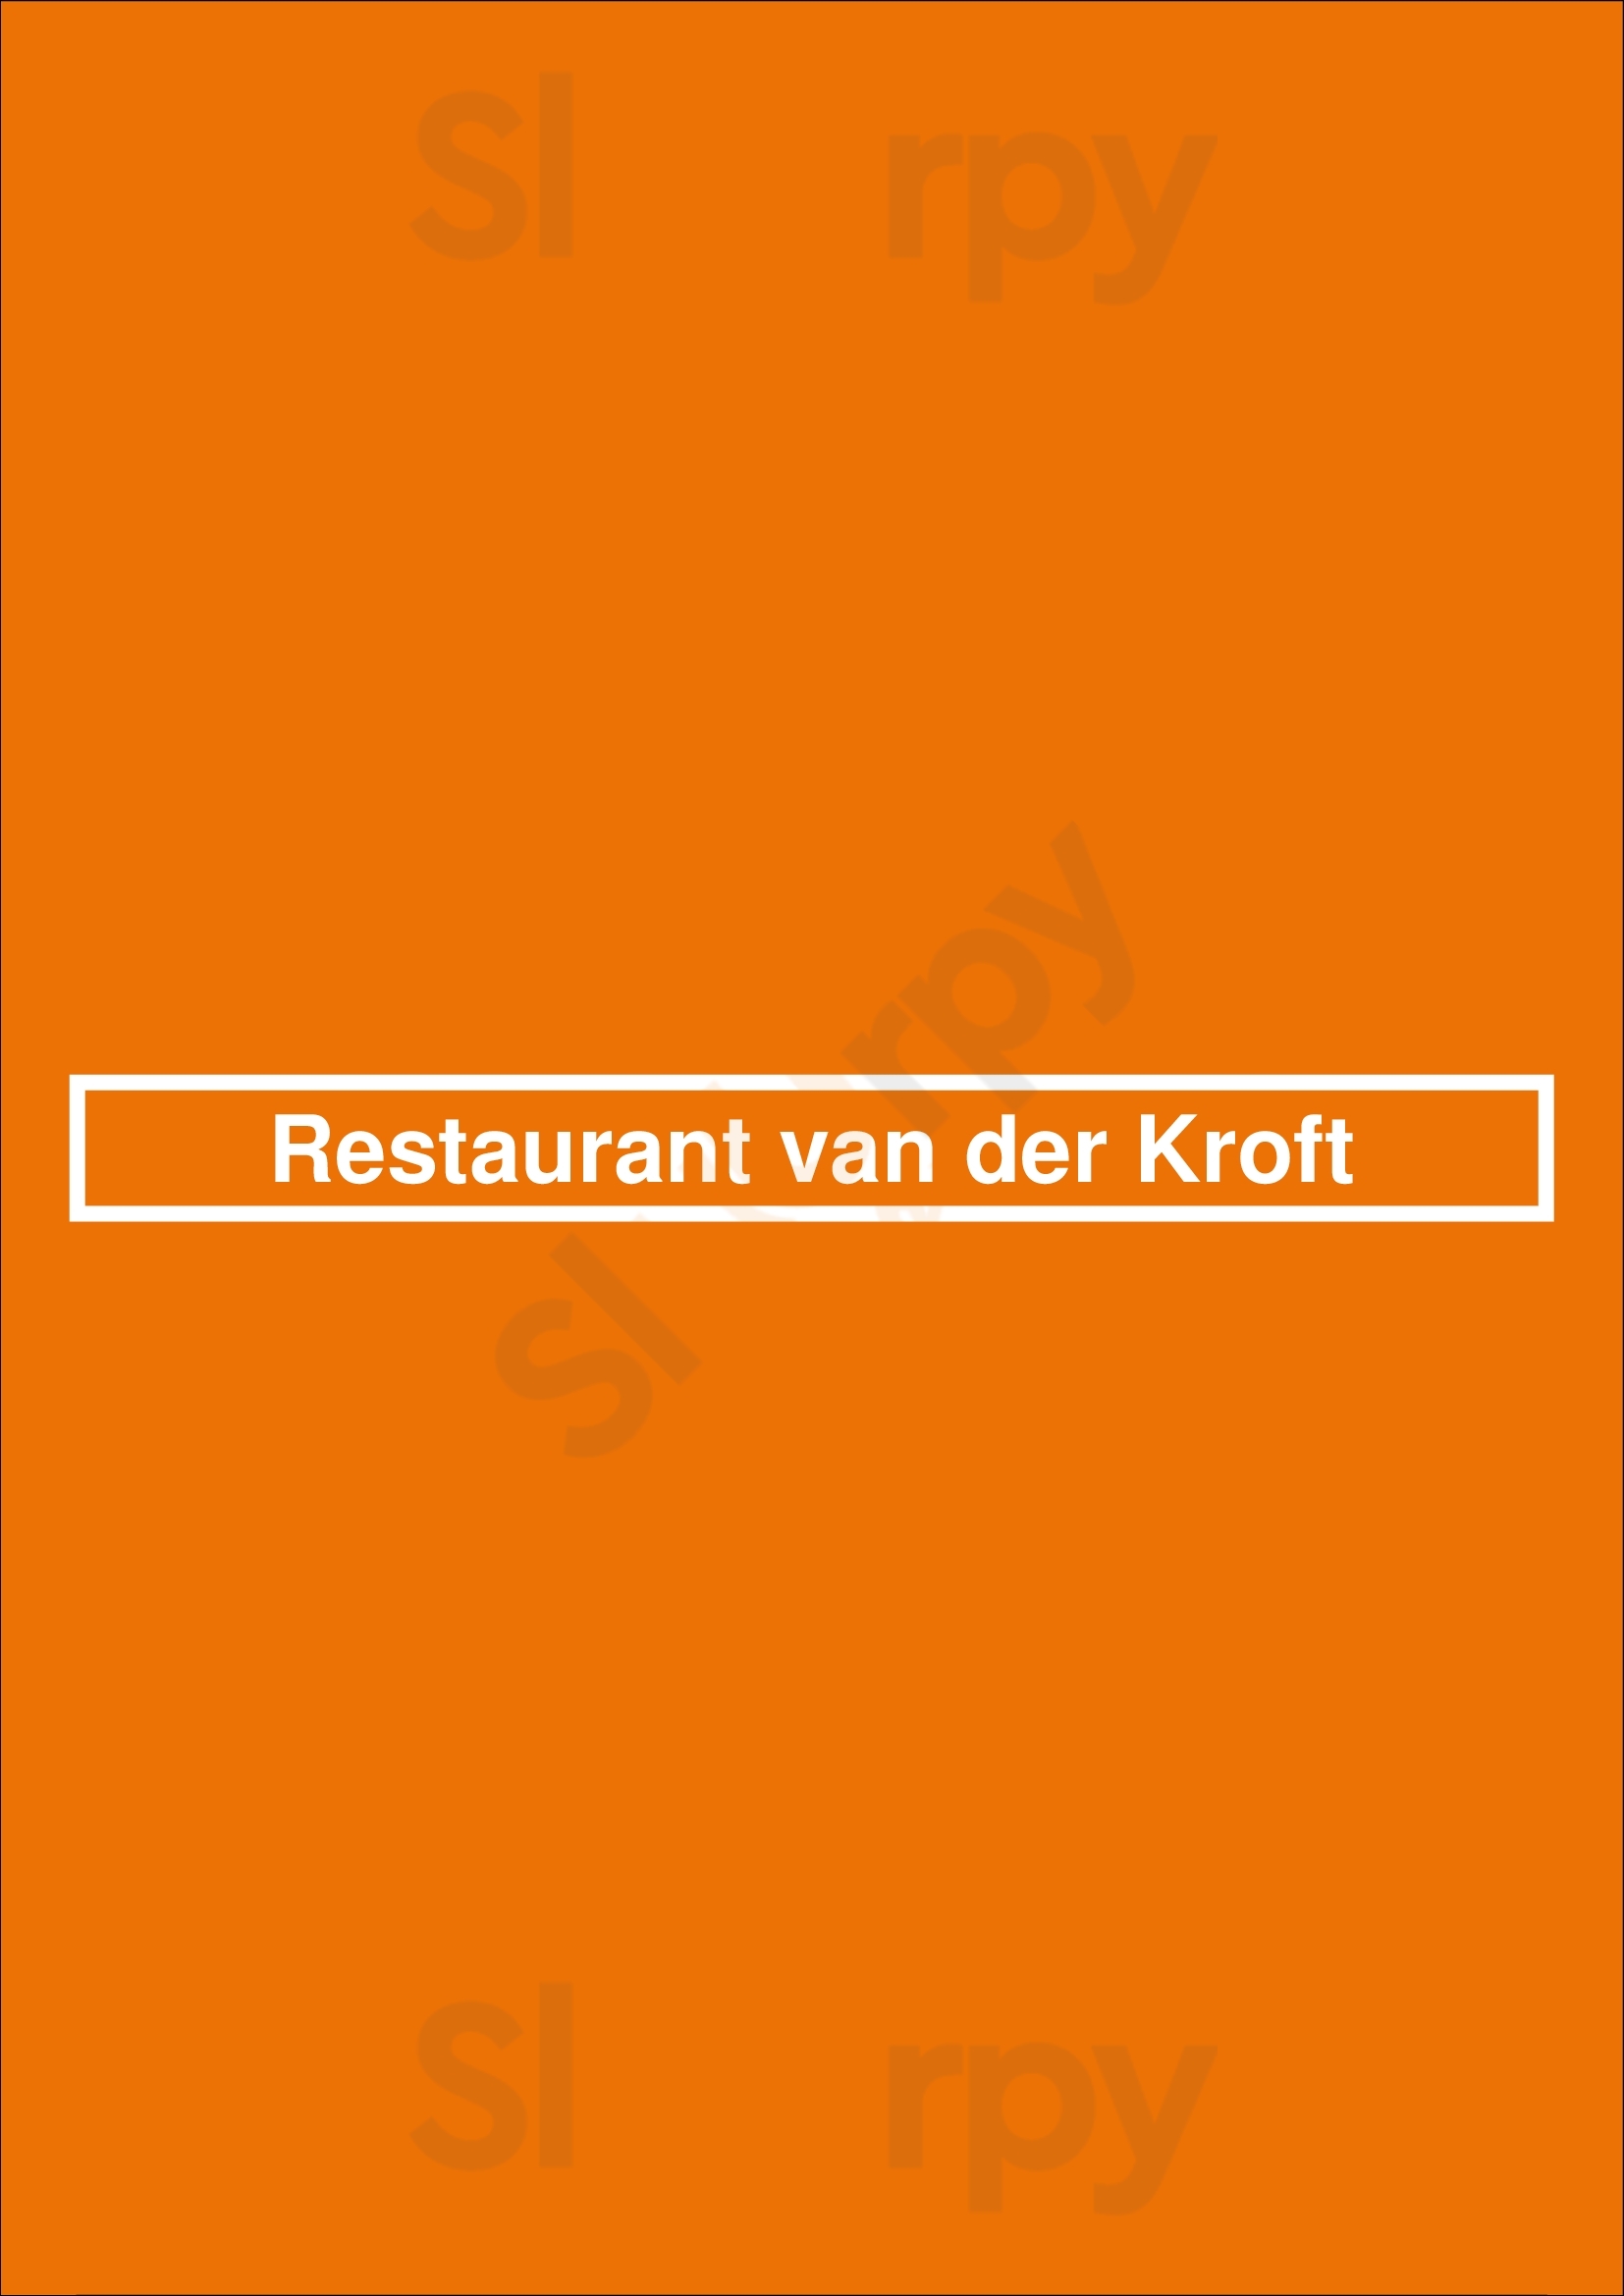 Restaurant Van Der Kroft Hoorn Menu - 1